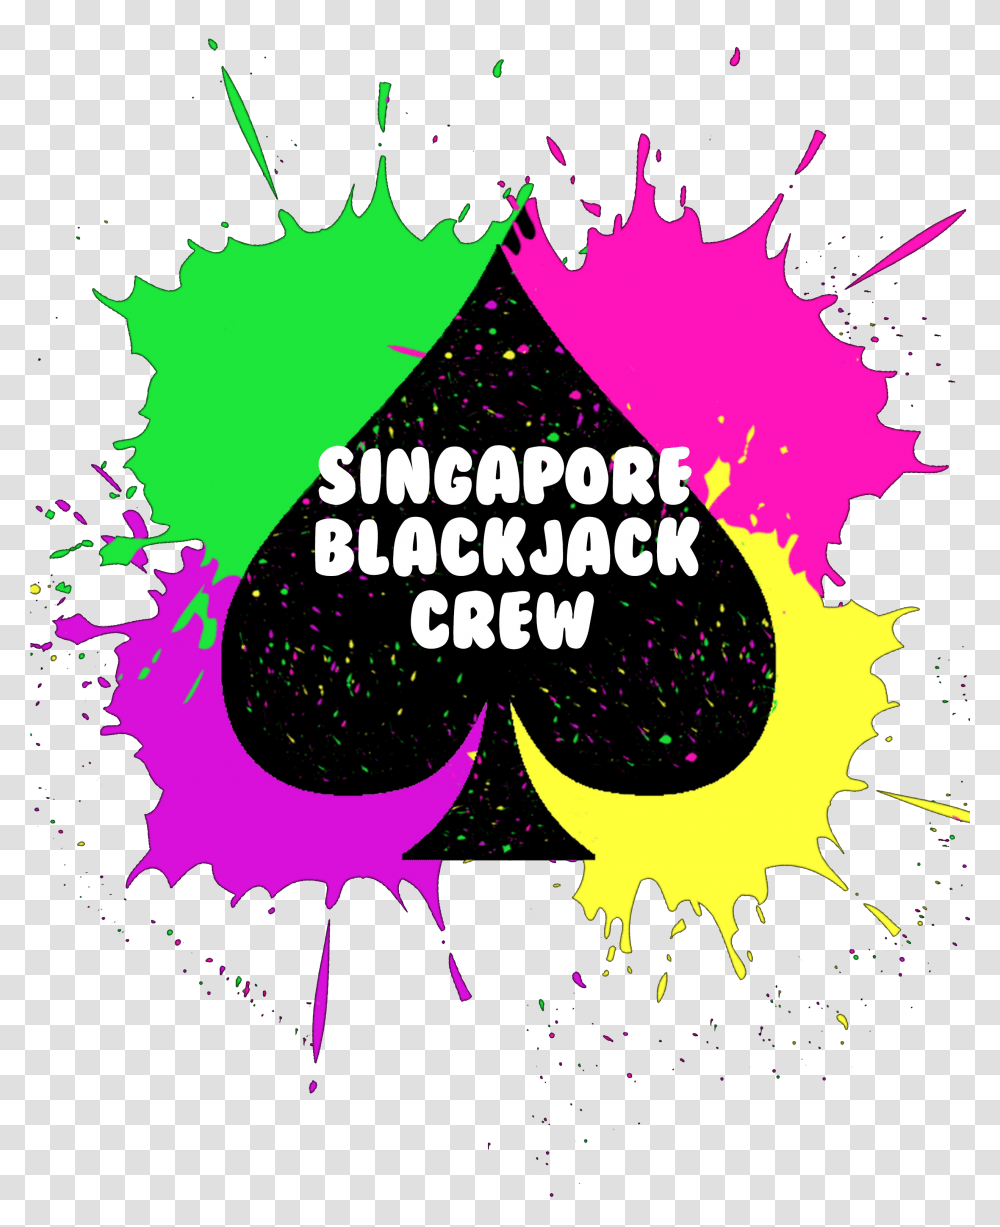 Singapore Blackjack Crew Grafham Water Centre, Graphics, Art, Poster, Label Transparent Png